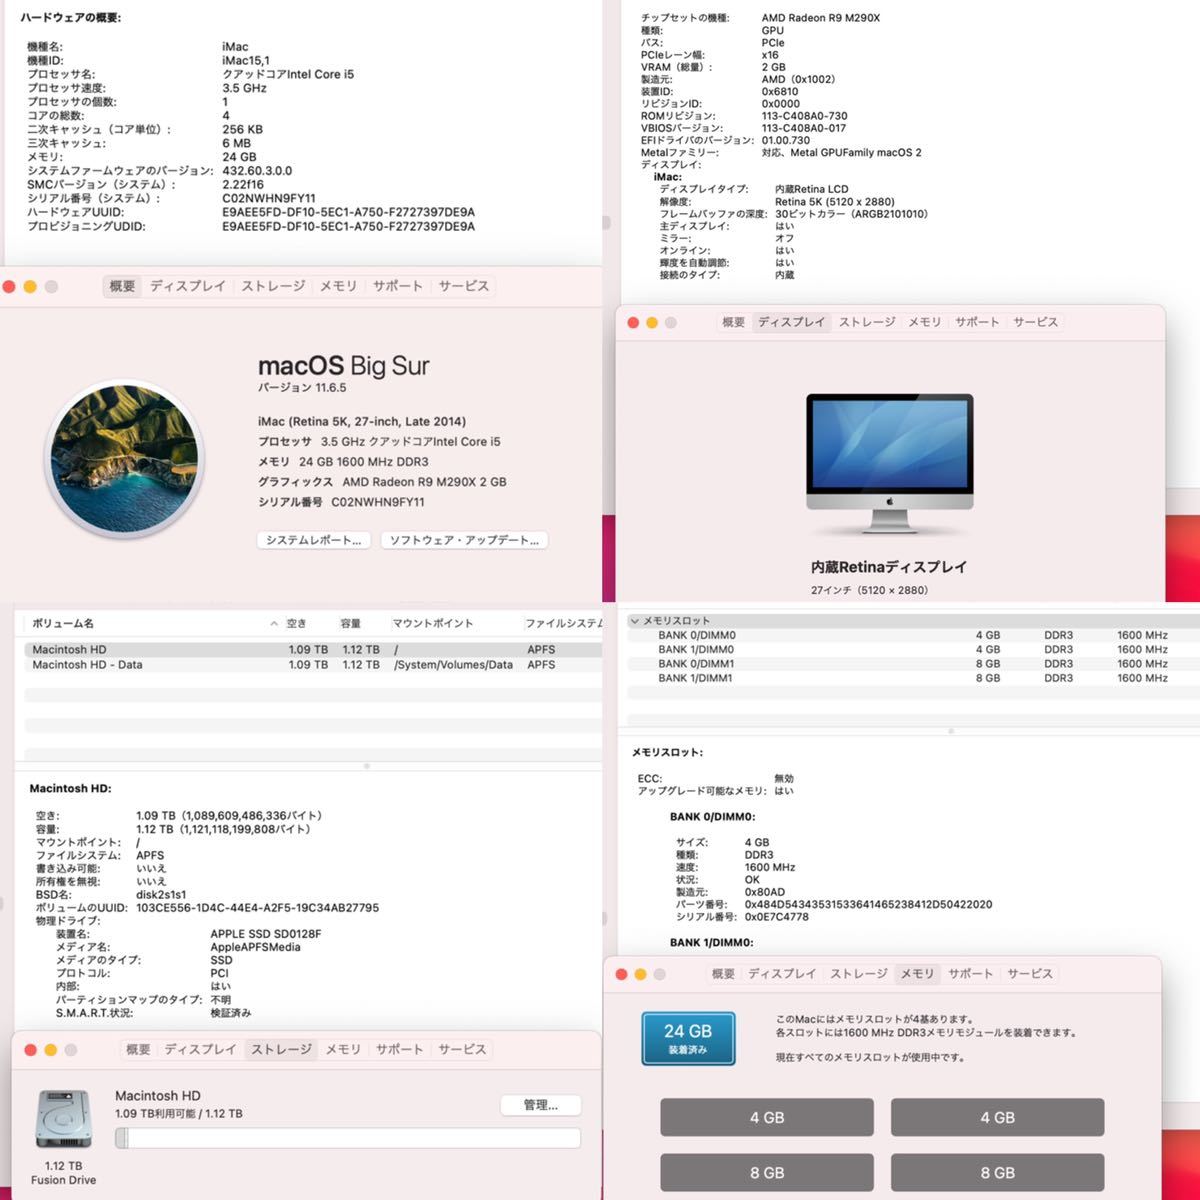 Apple iMac Retina 5K 27インチ Late 2014 MF886J/A カスタム Core i5 3.5GHz/24GB/1TB Fusion/Radeon R9 M290X 2GB/A1419 - 8